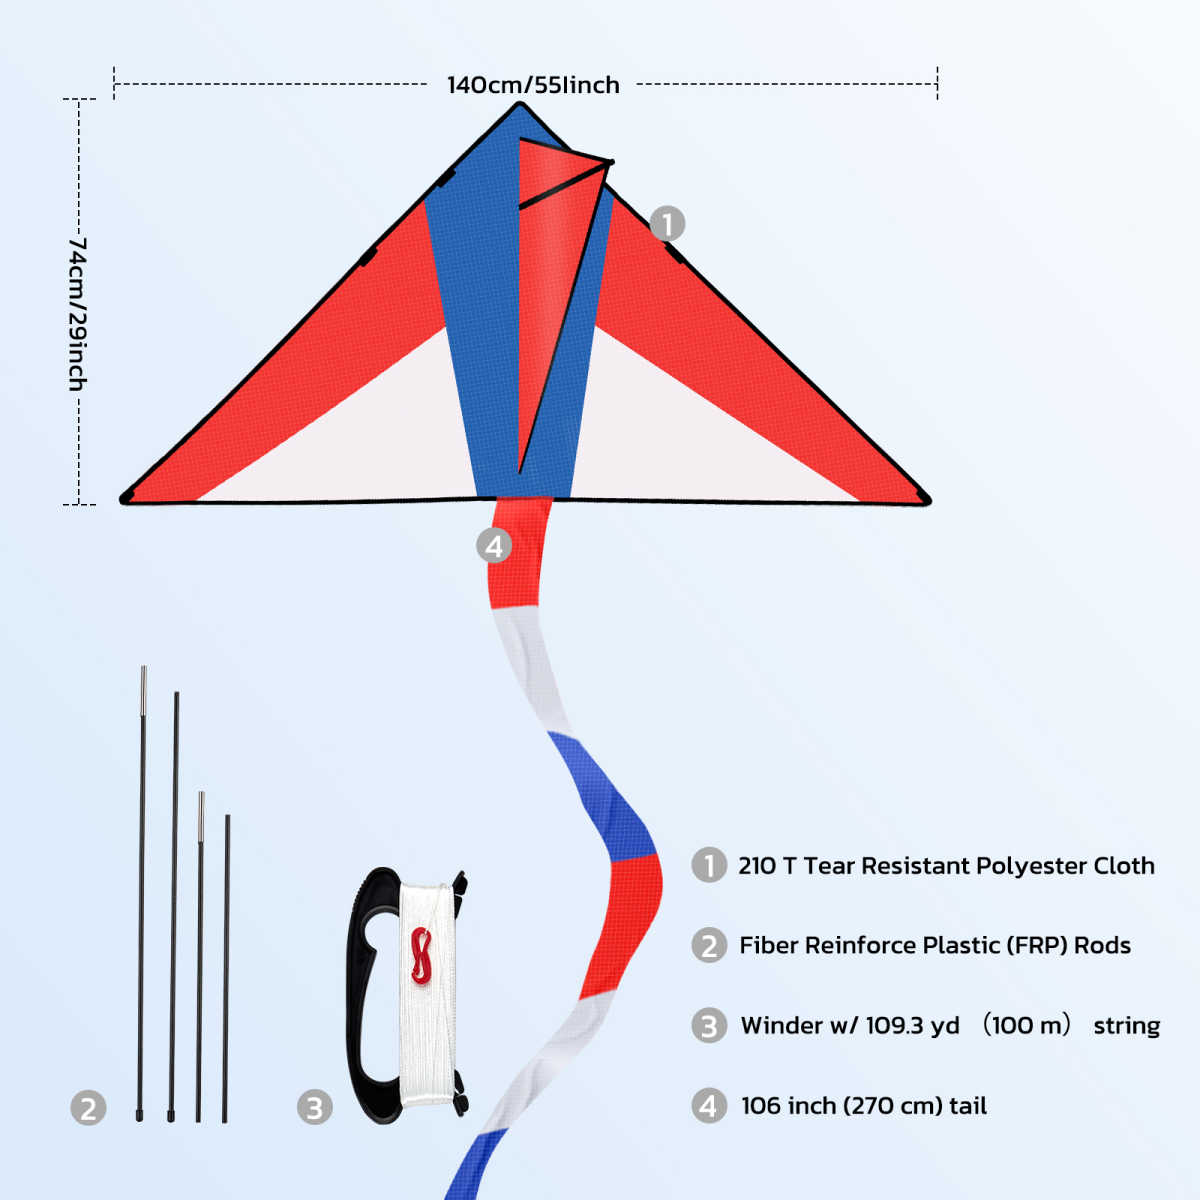 Triangle kite